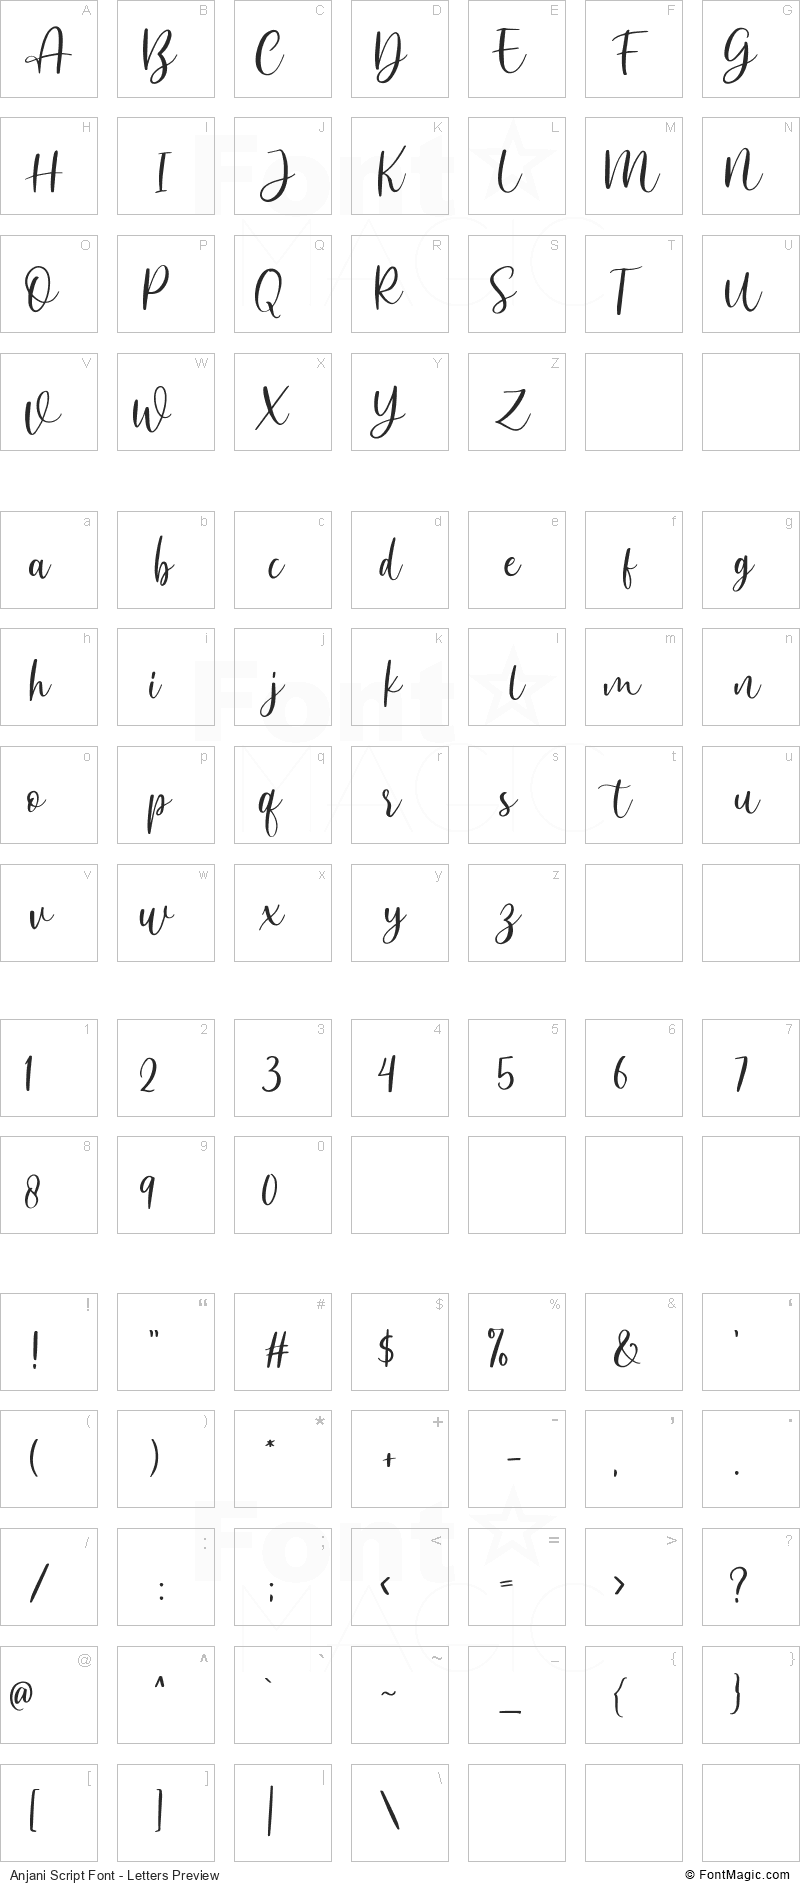 Anjani Script Font - All Latters Preview Chart